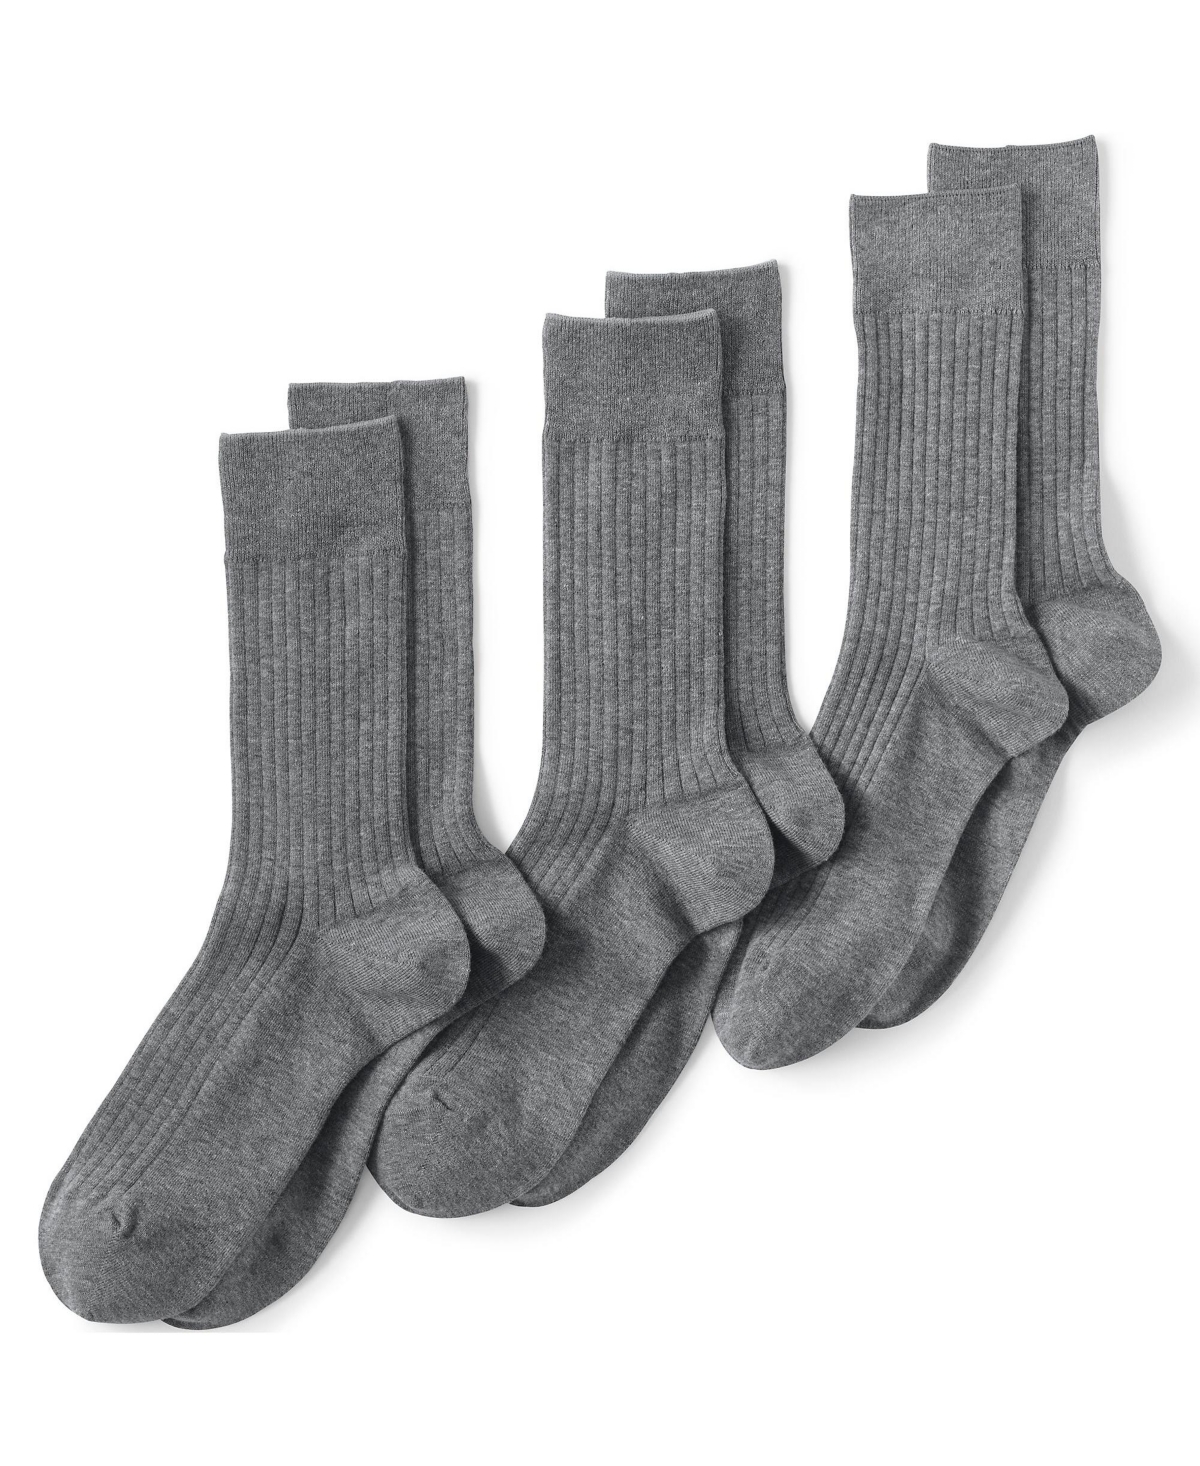 Men's Seamless Toe Cotton Rib Dress Socks (3-pack) - Pewter heather